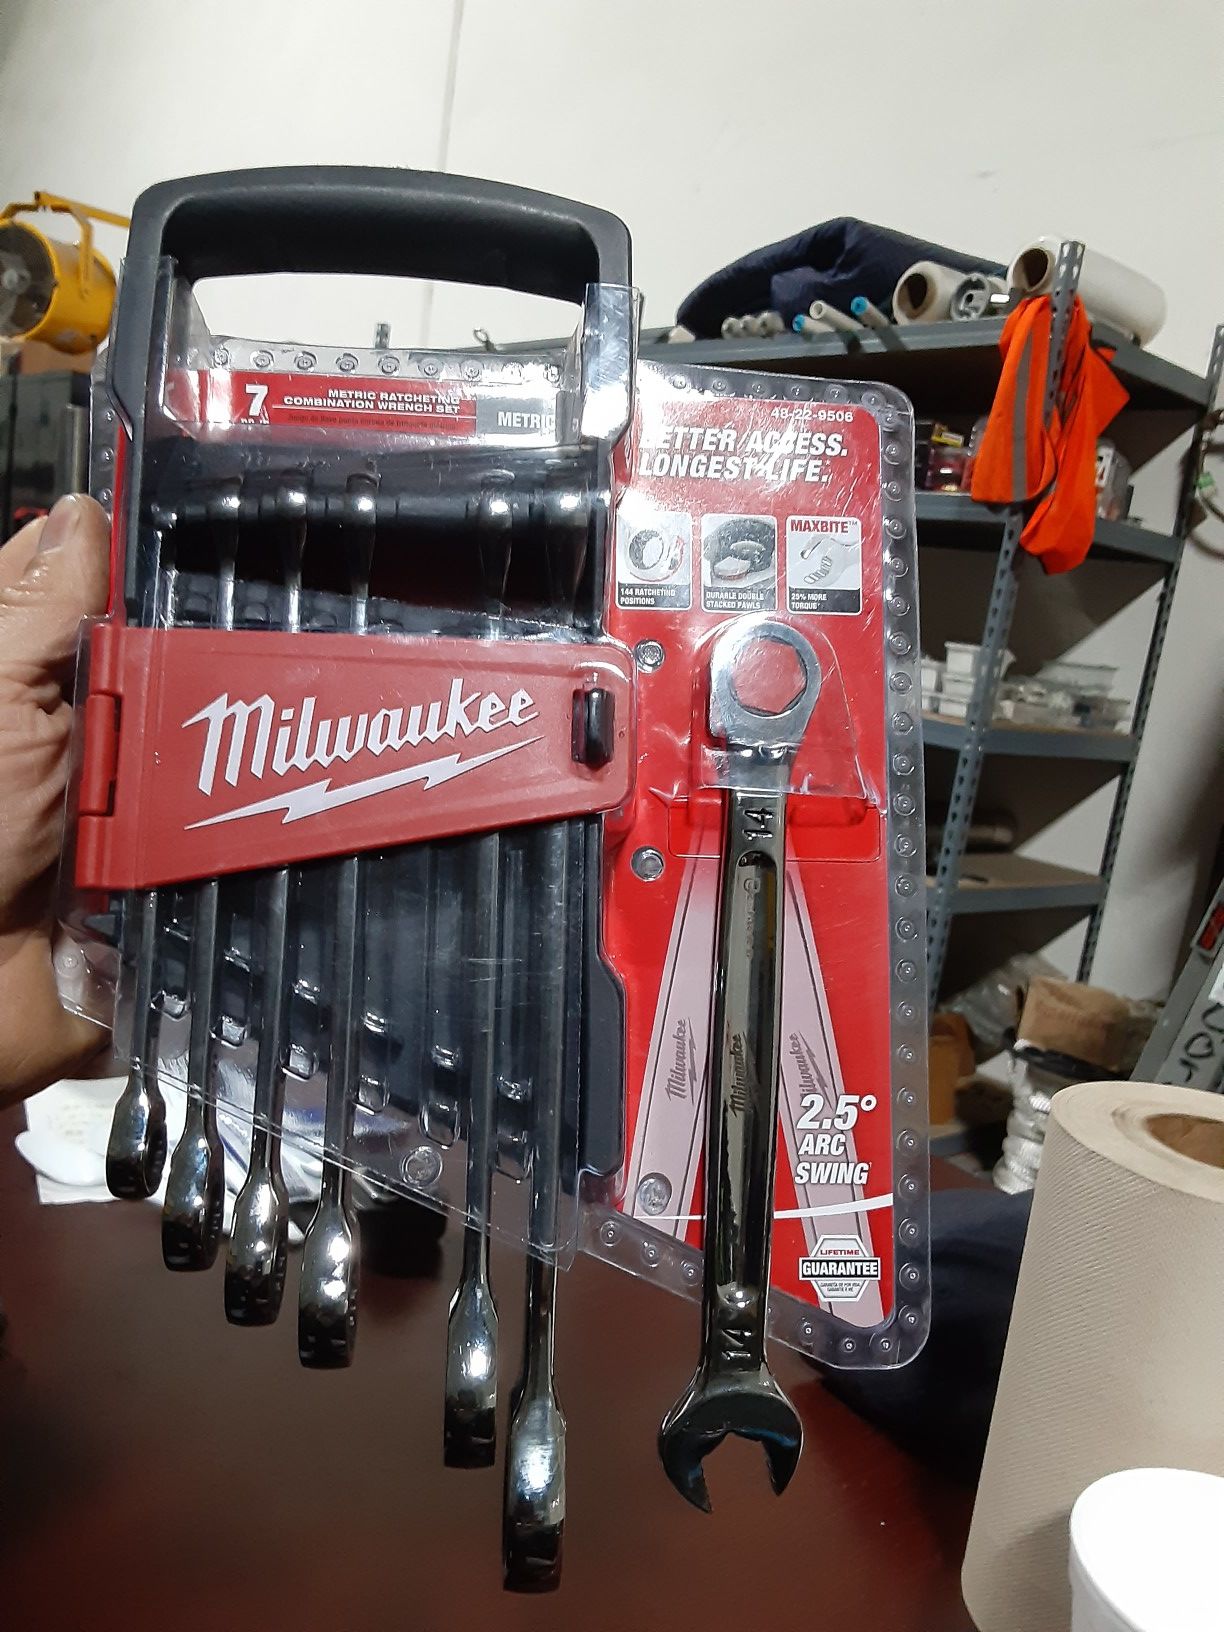 MILWAUKEE 7pc Metric Ratcheting Wrench Set